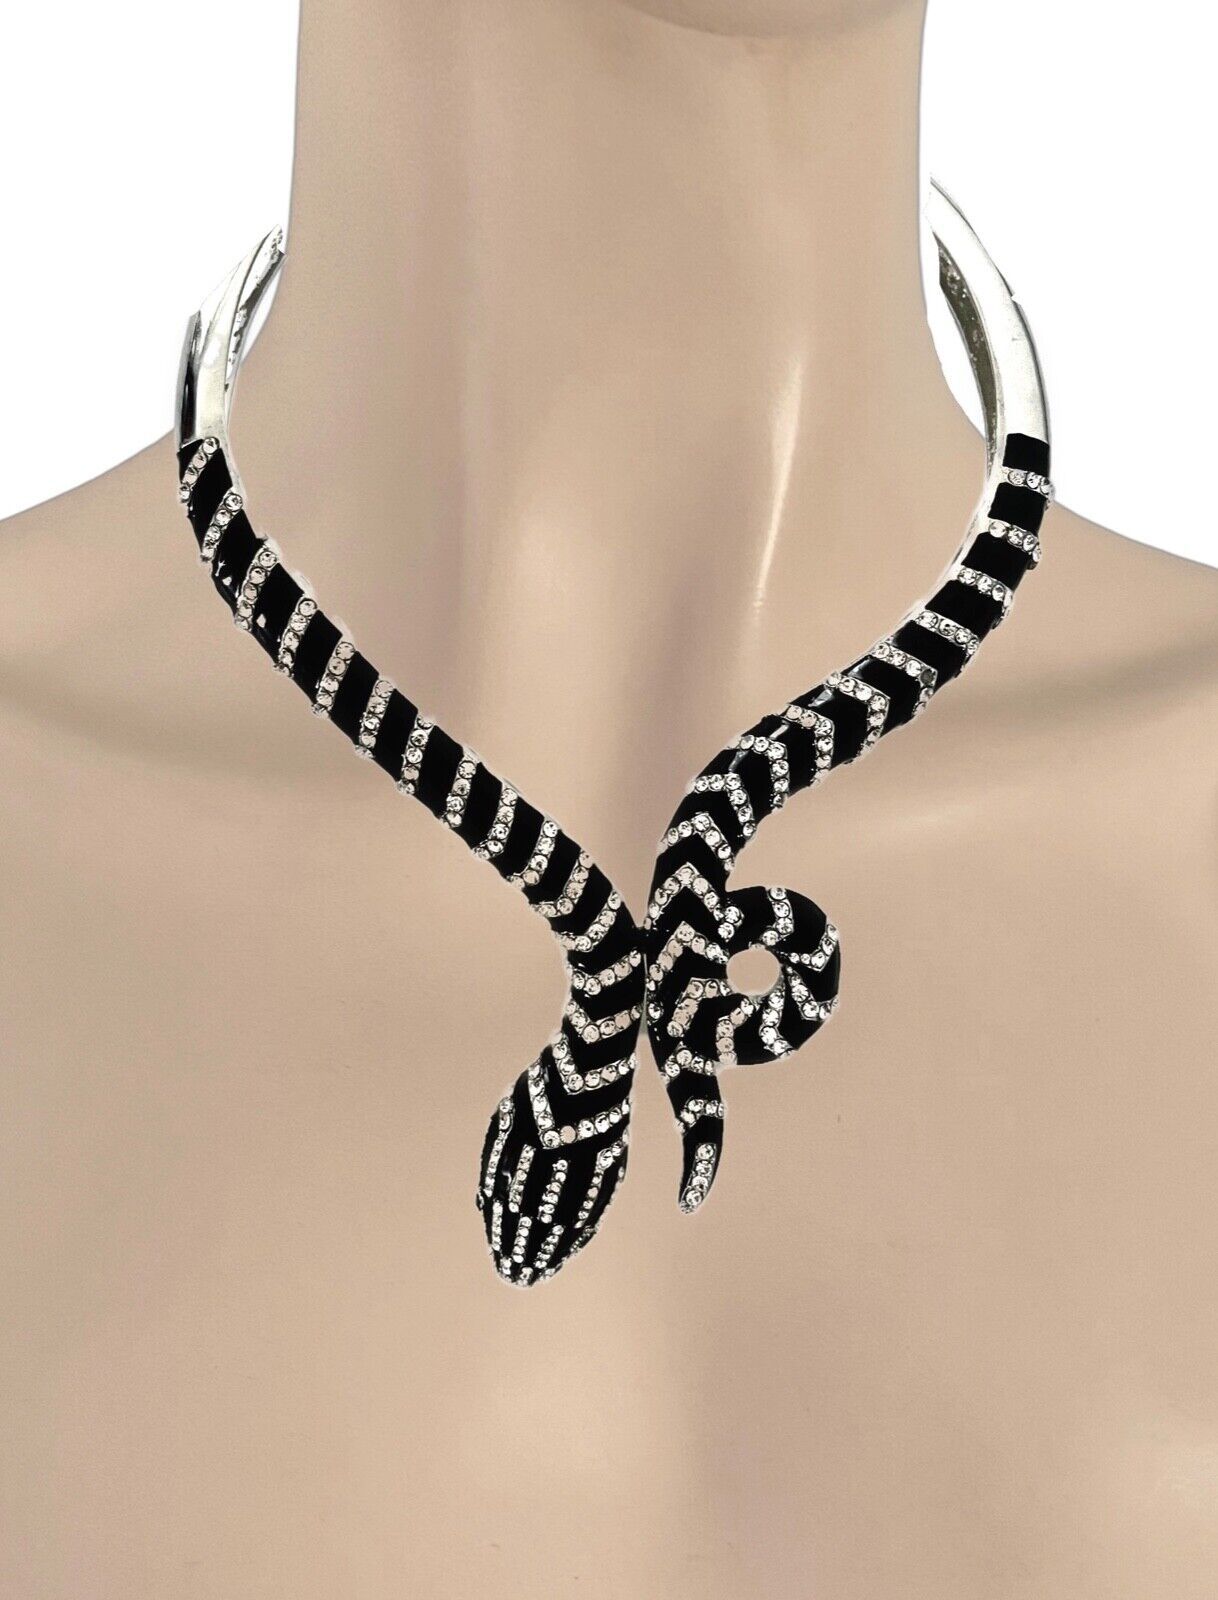 2.75" Drop Clear Rhinestones Black Statement King Snake Necklace Earrings Set - $54.15